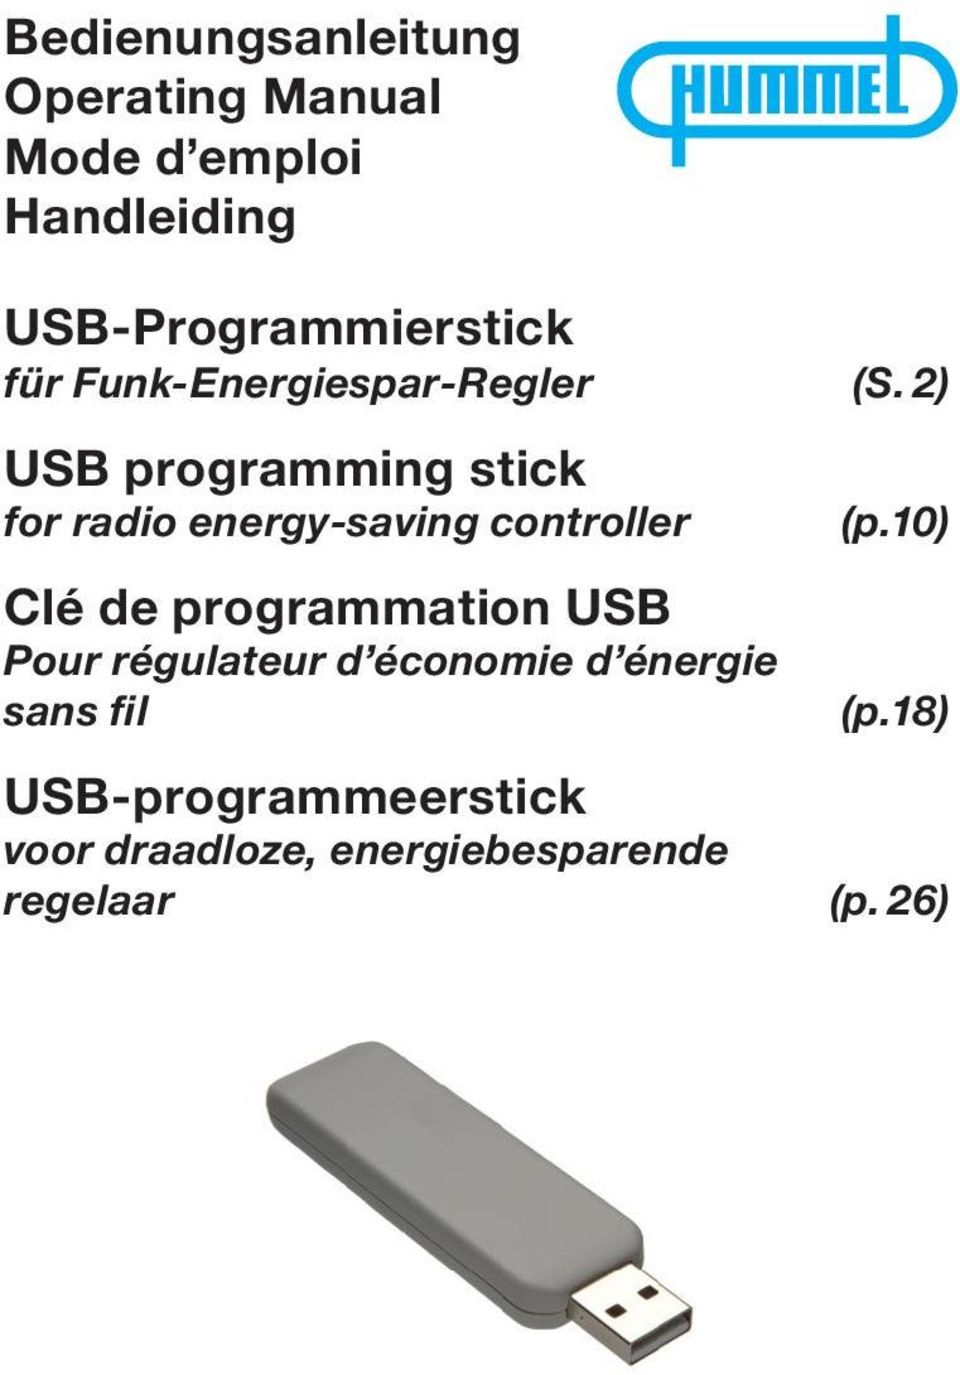 2) USB programming stick for radio energy-saving controller (p.